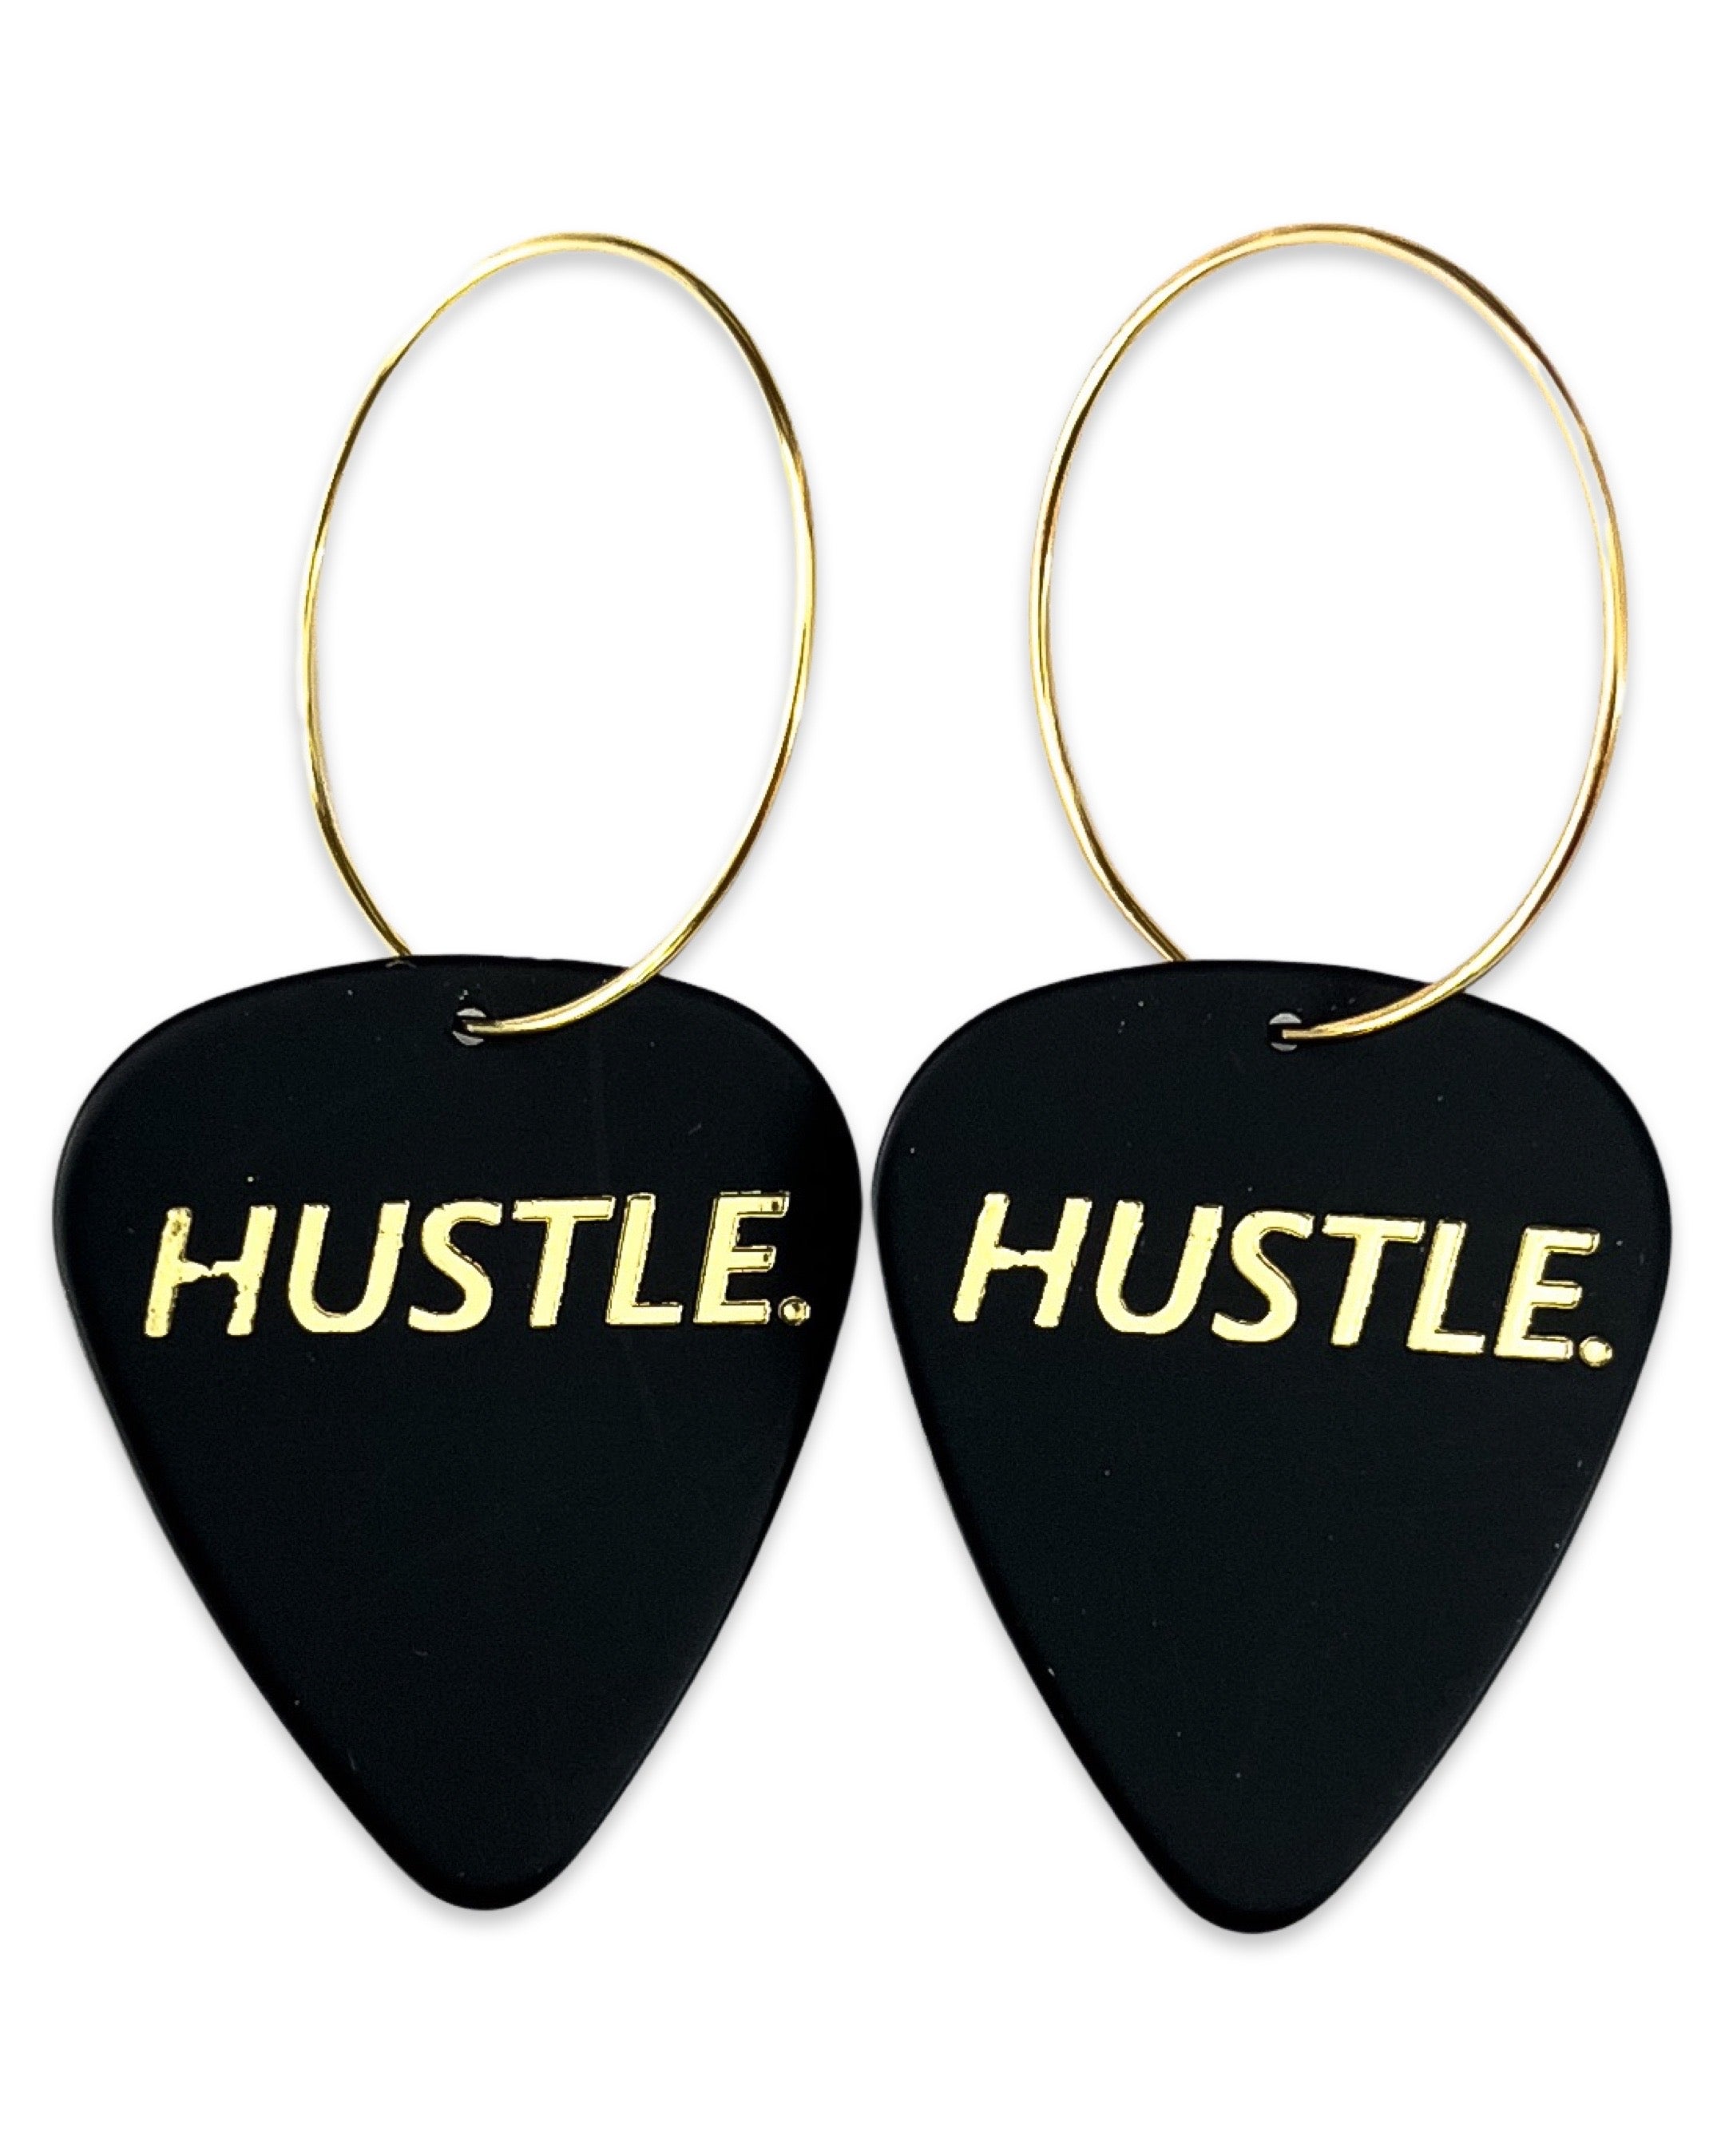 HUSTLE. Black Celluloid Reversible Single Guitar Pick Earrings